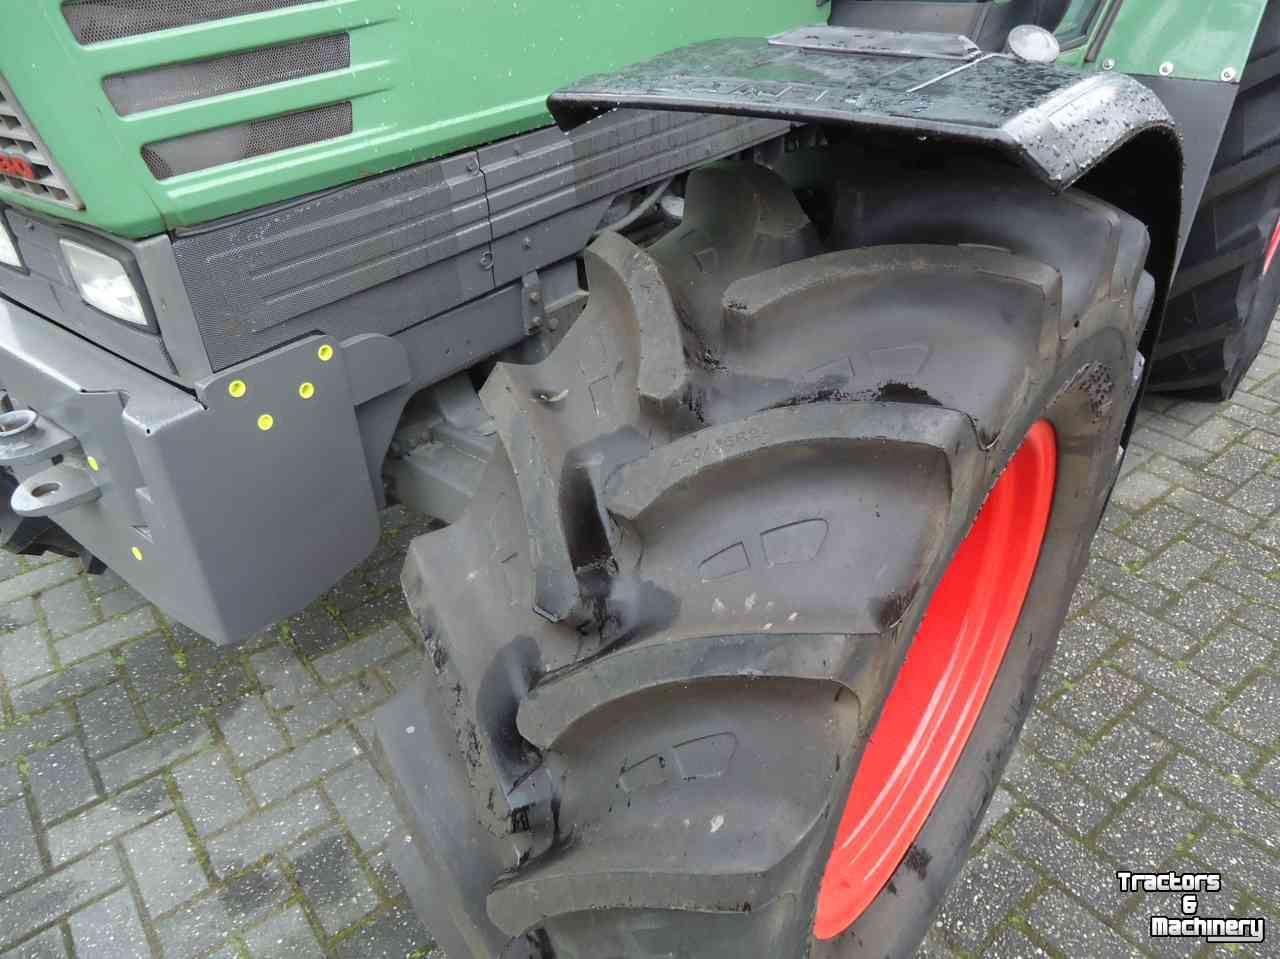 Tracteurs Fendt Farmer 308 C.